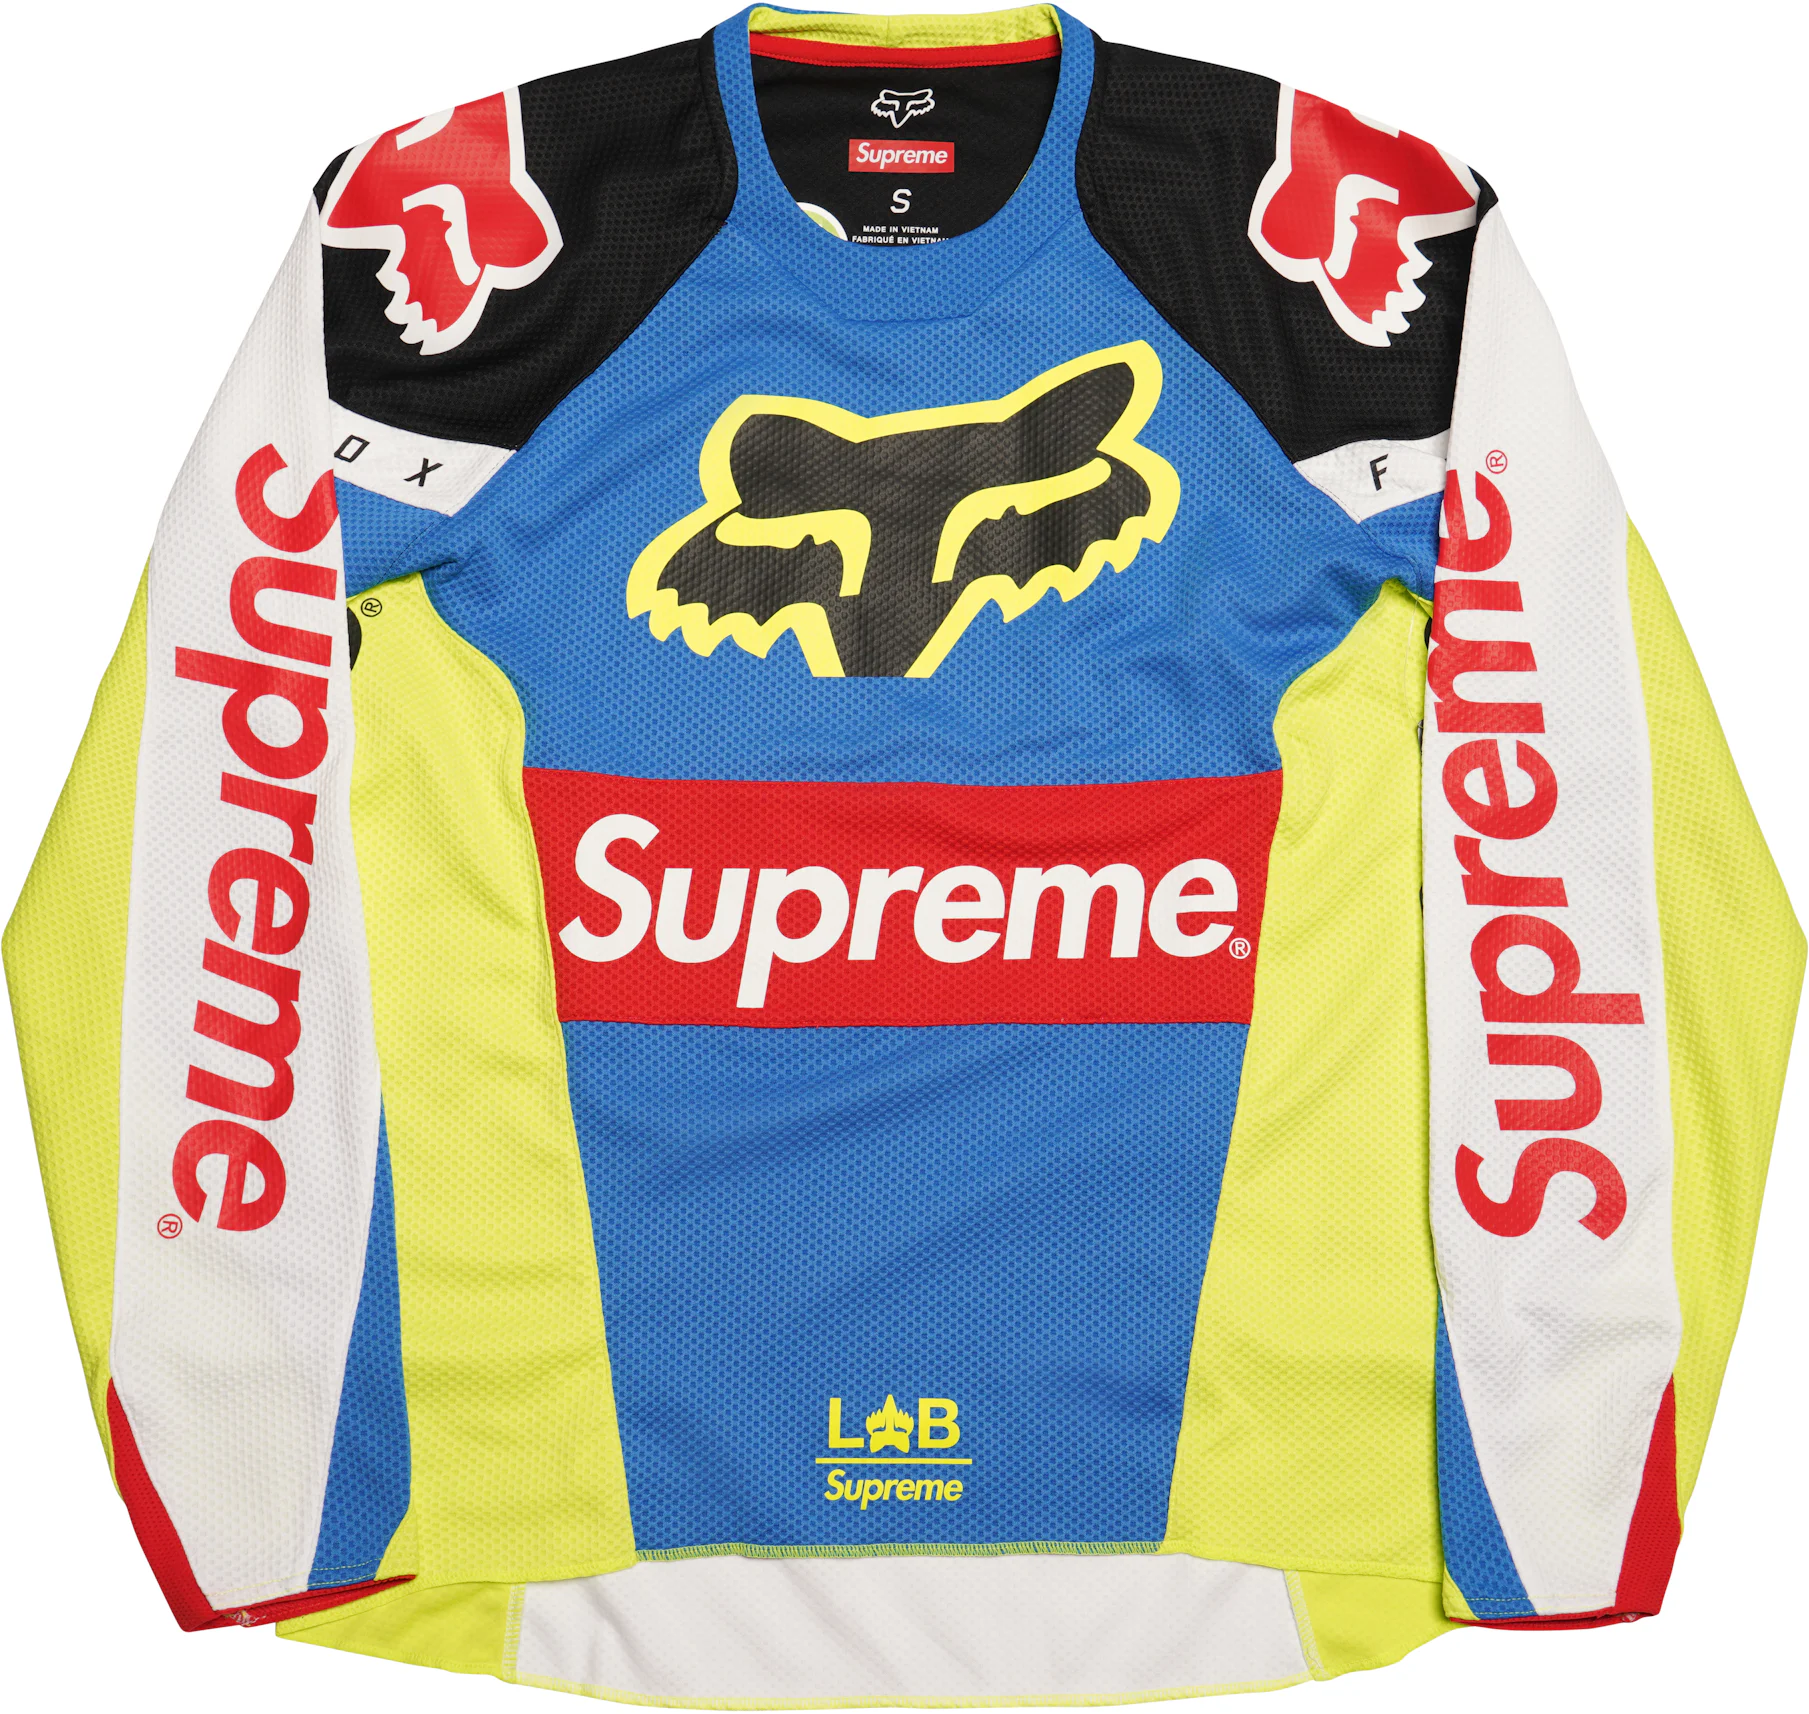 https://images.stockx.com/images/Supreme-Fox-Racing-Moto-Jersey-Top-Multicolor.jpg?fit=fill&bg=FFFFFF&w=1200&h=857&fm=webp&auto=compress&dpr=2&trim=color&updated_at=1614785601&q=60